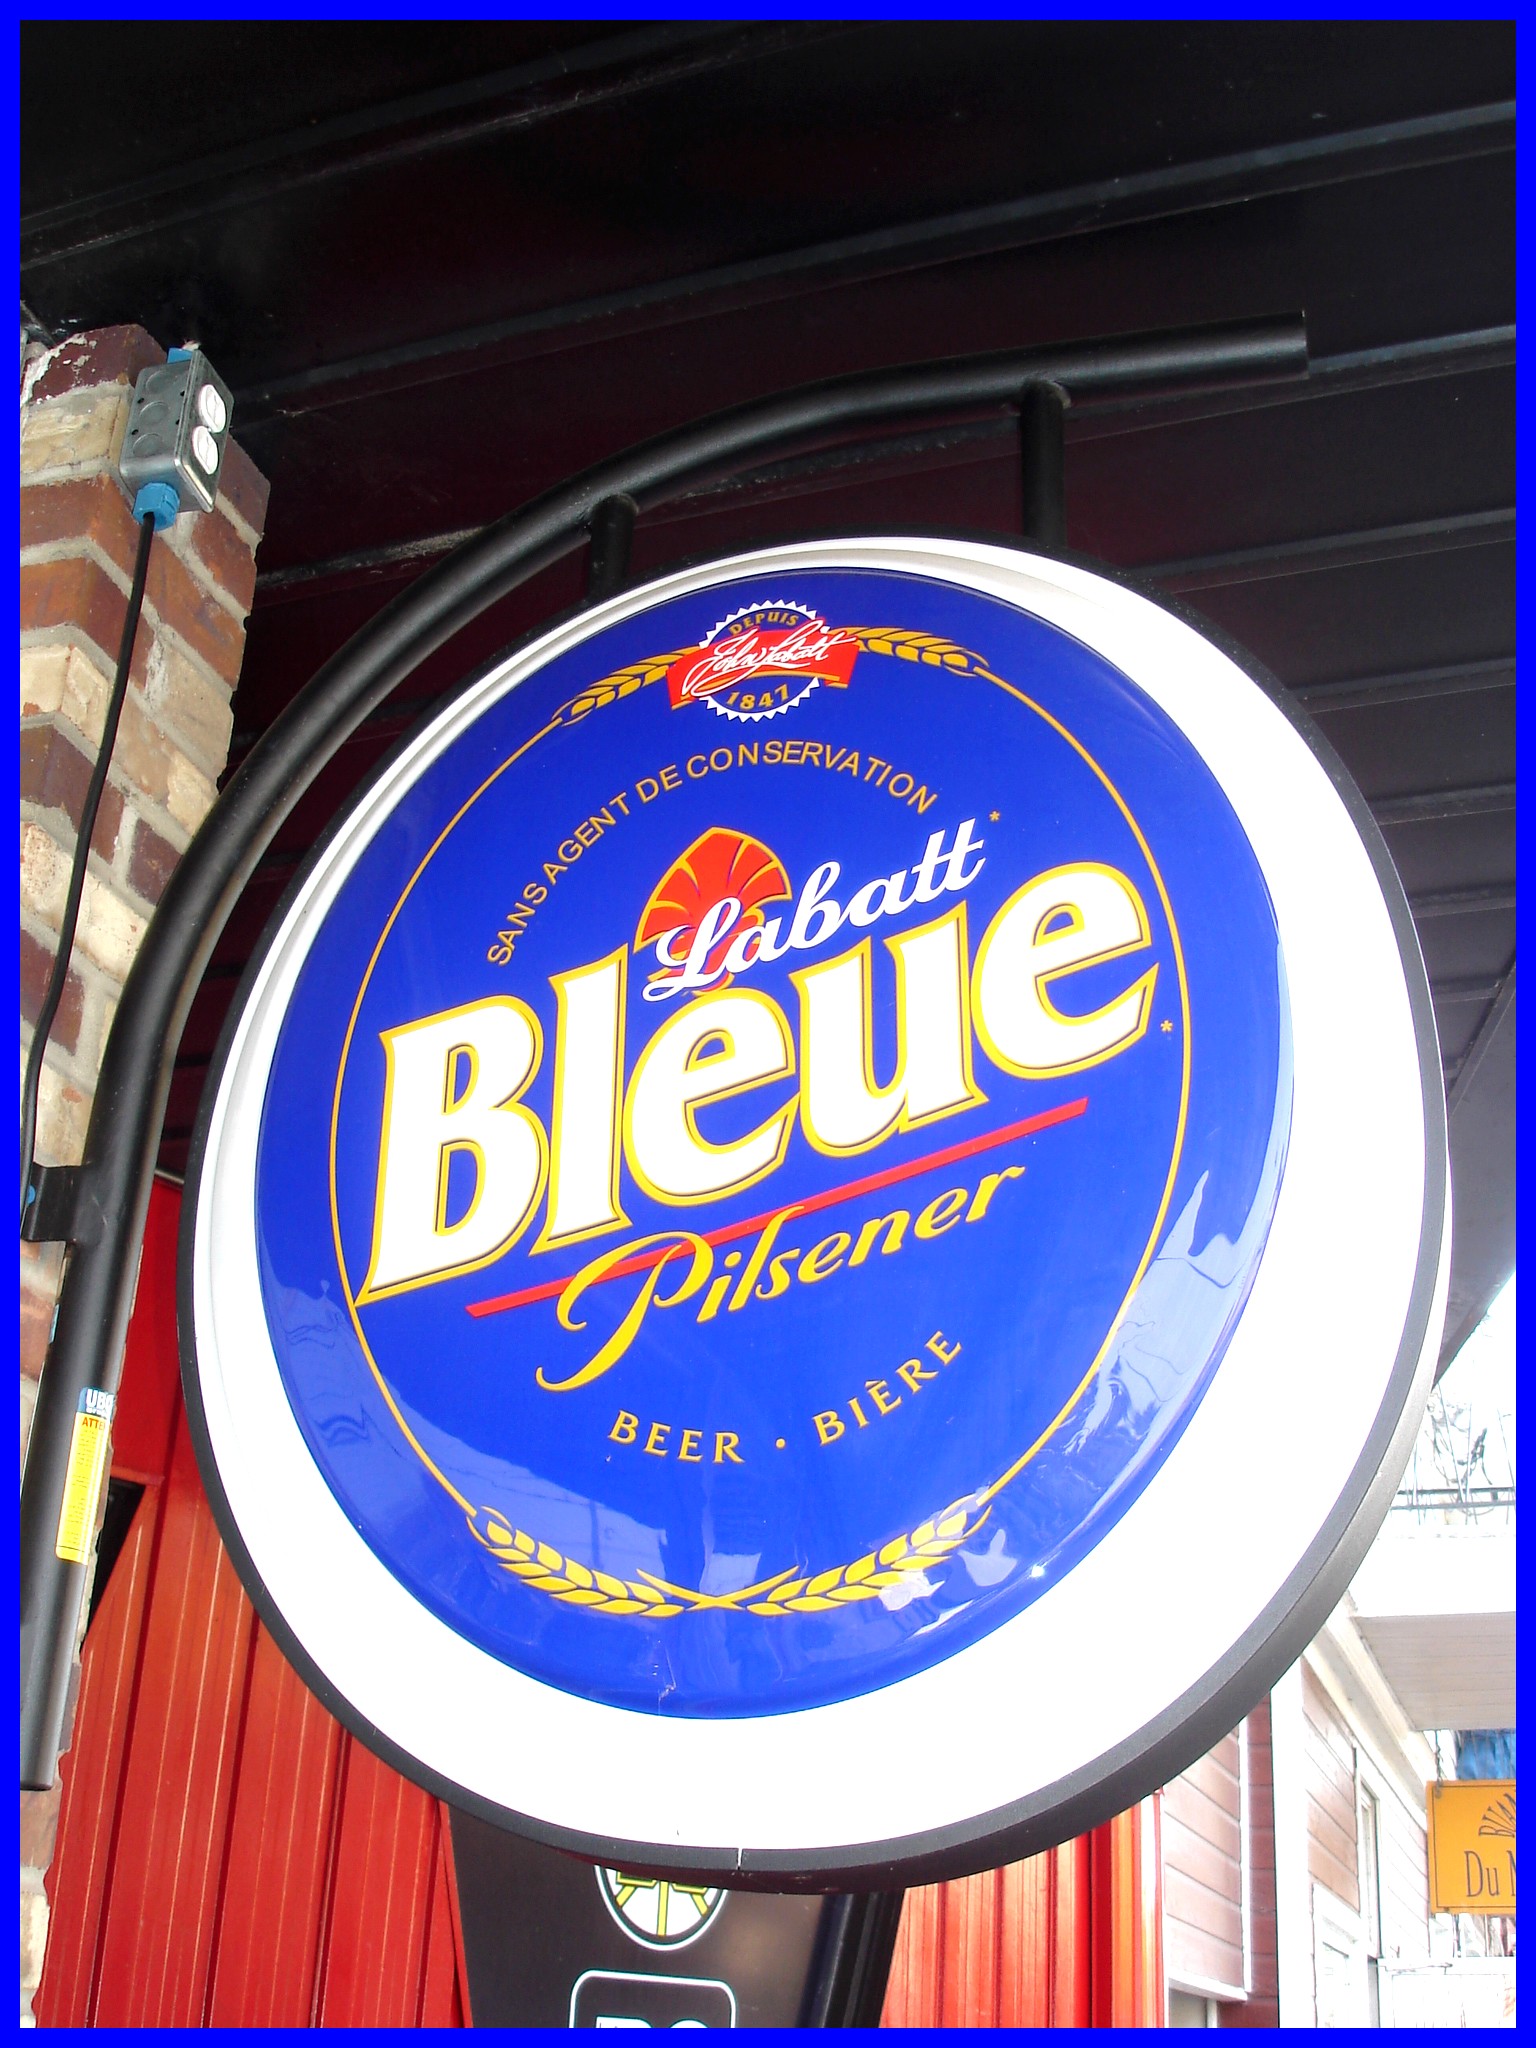 Labatt Bleue Pilsener  - Hometown blue hops sign - Dans ma ville / 12-10-2008.